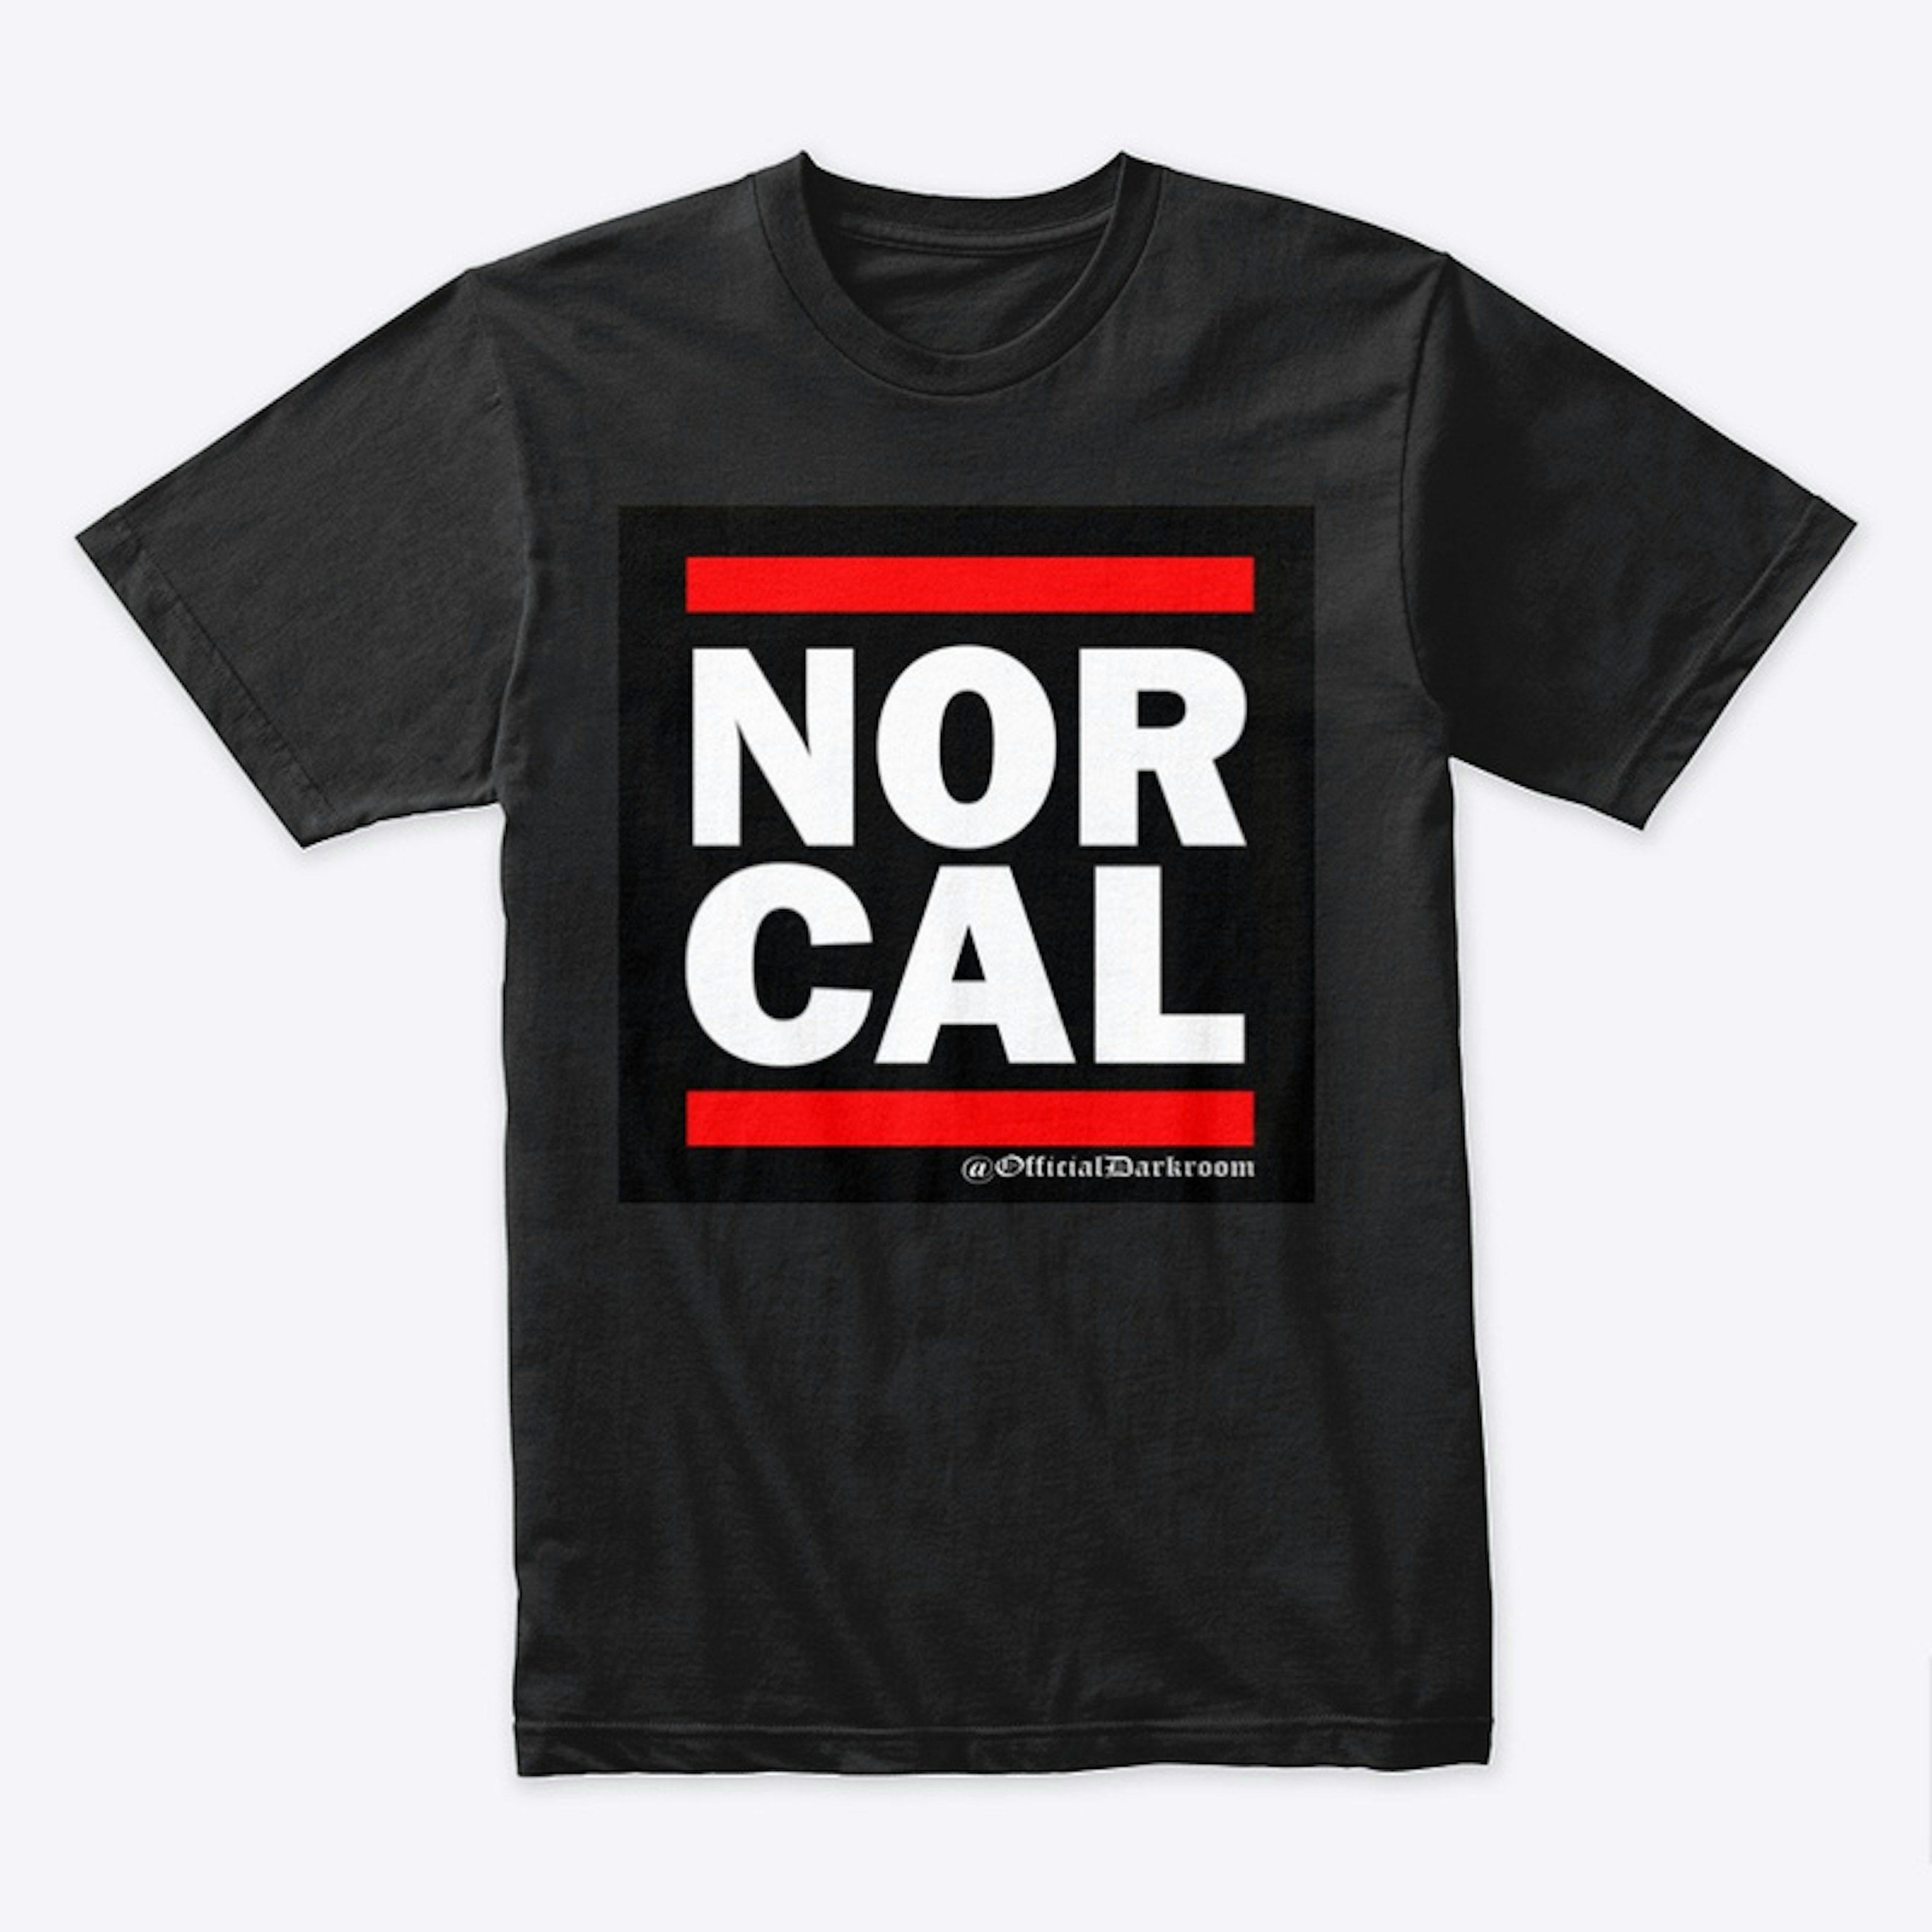 NorCal Official Darkroom Gear